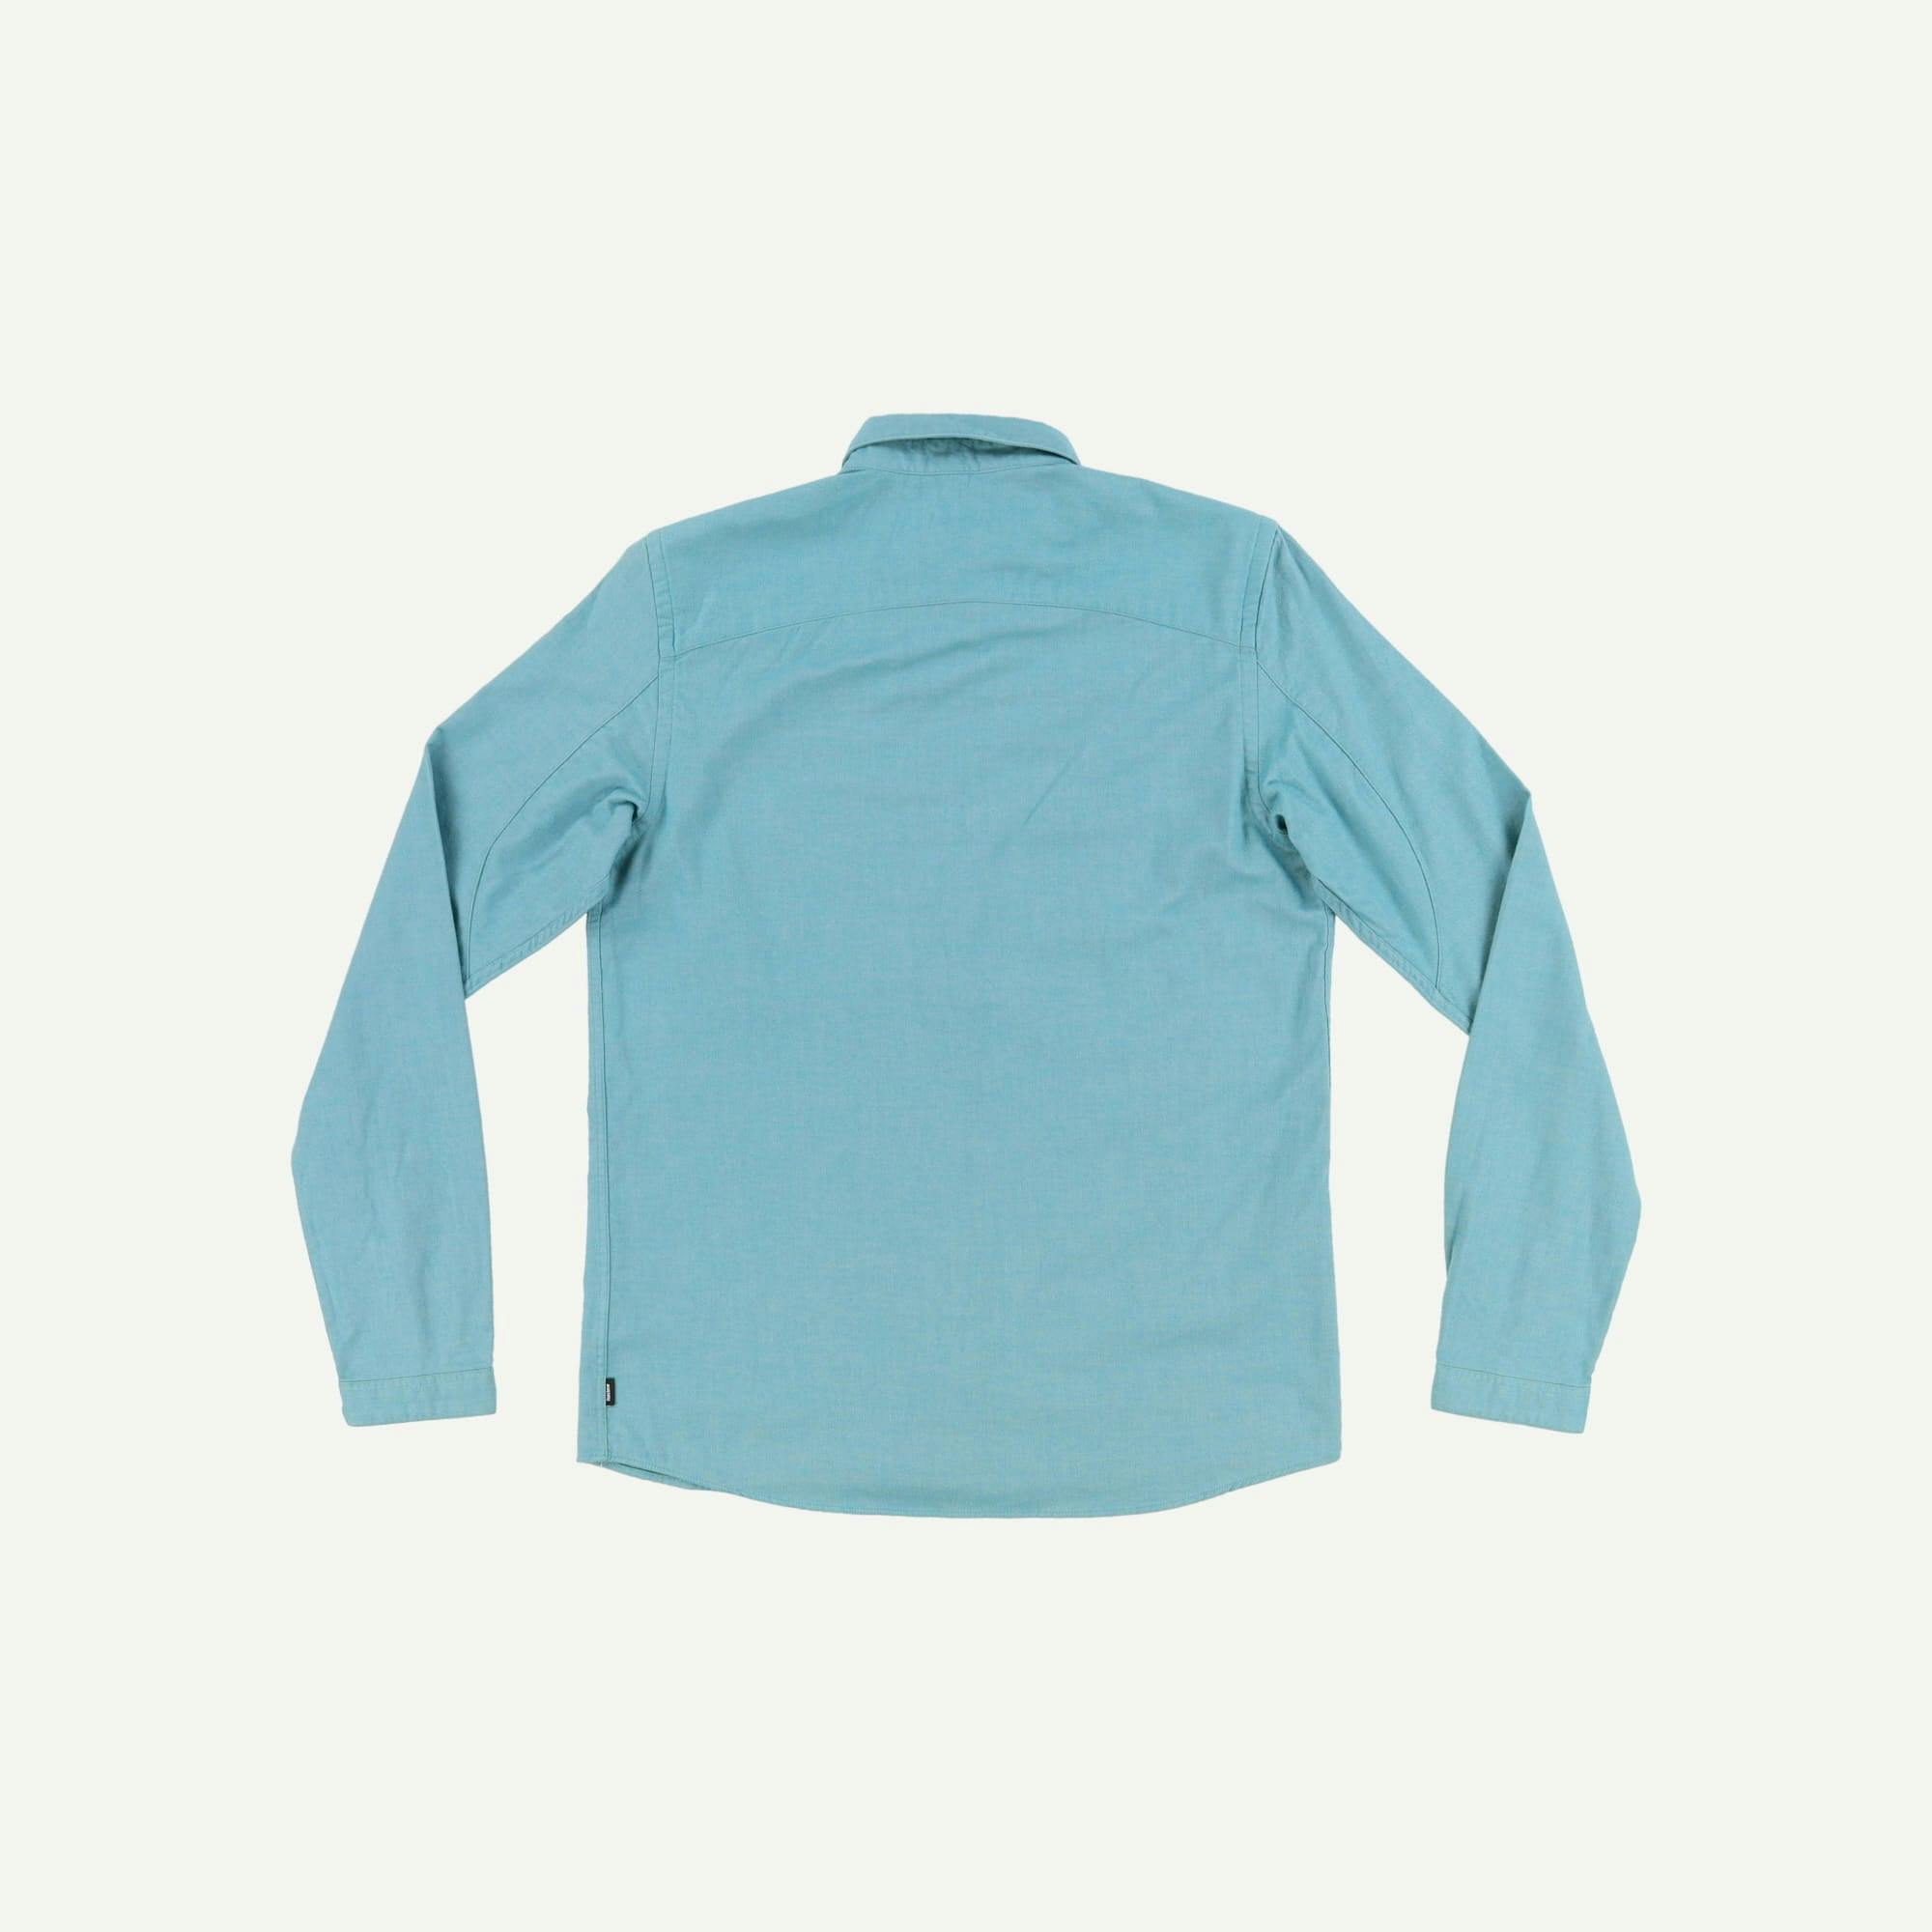 Finisterre As new Aqua Shirt